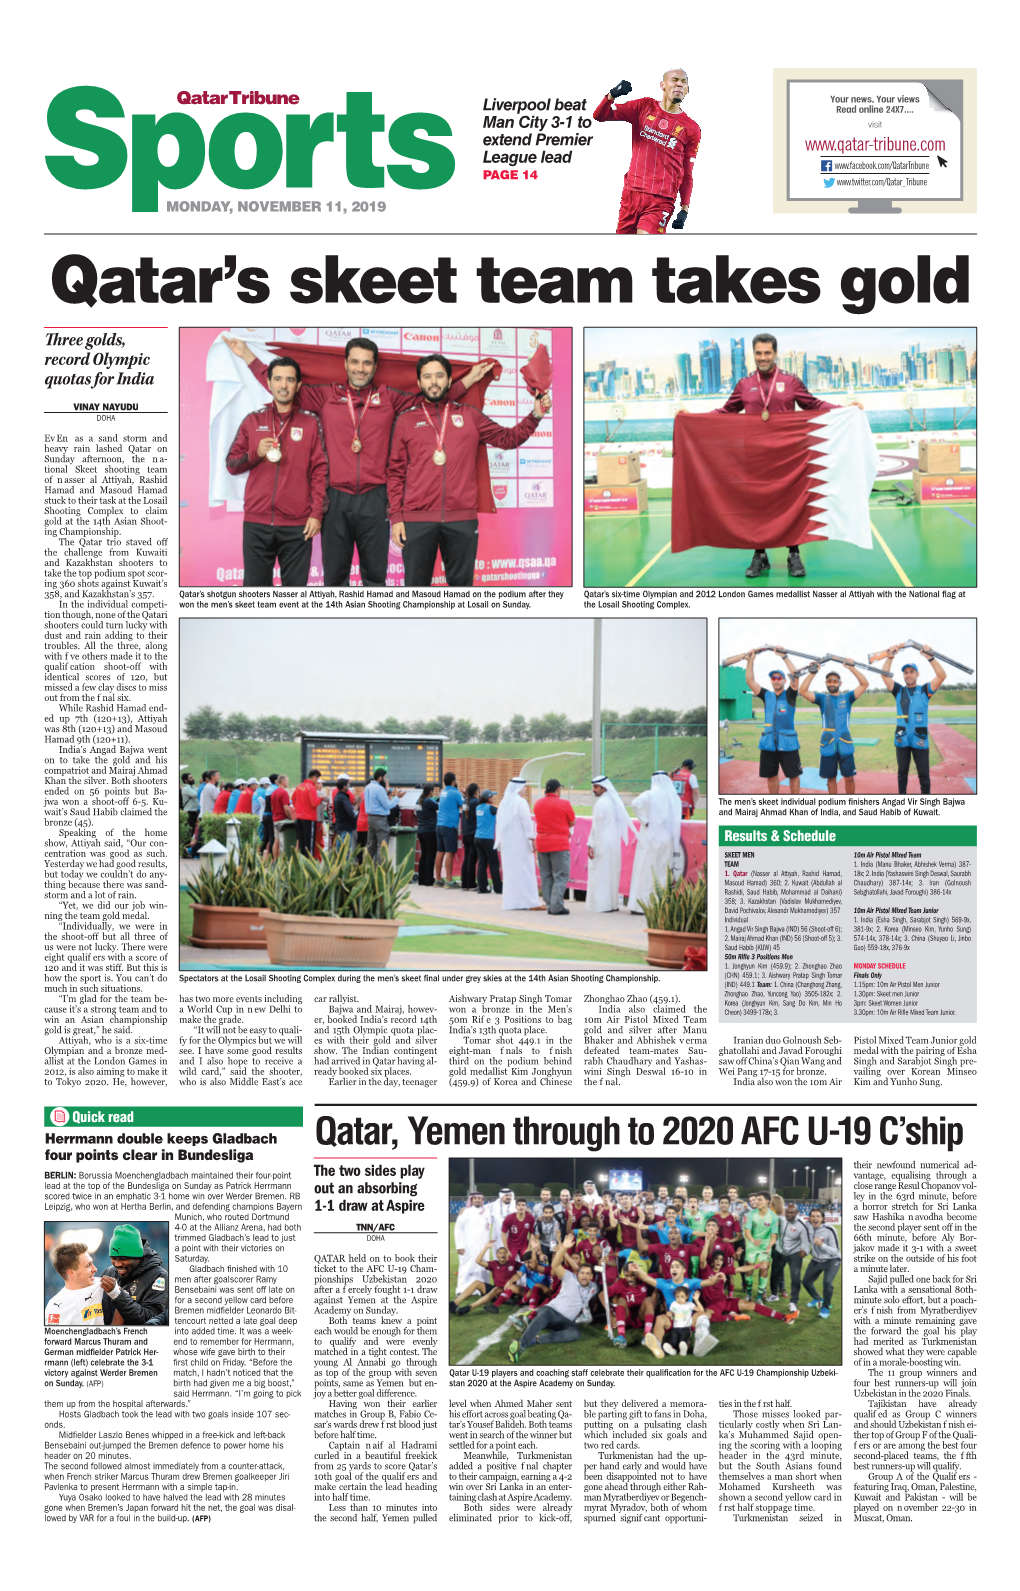 Qatar's Skeet Team Takes Gold